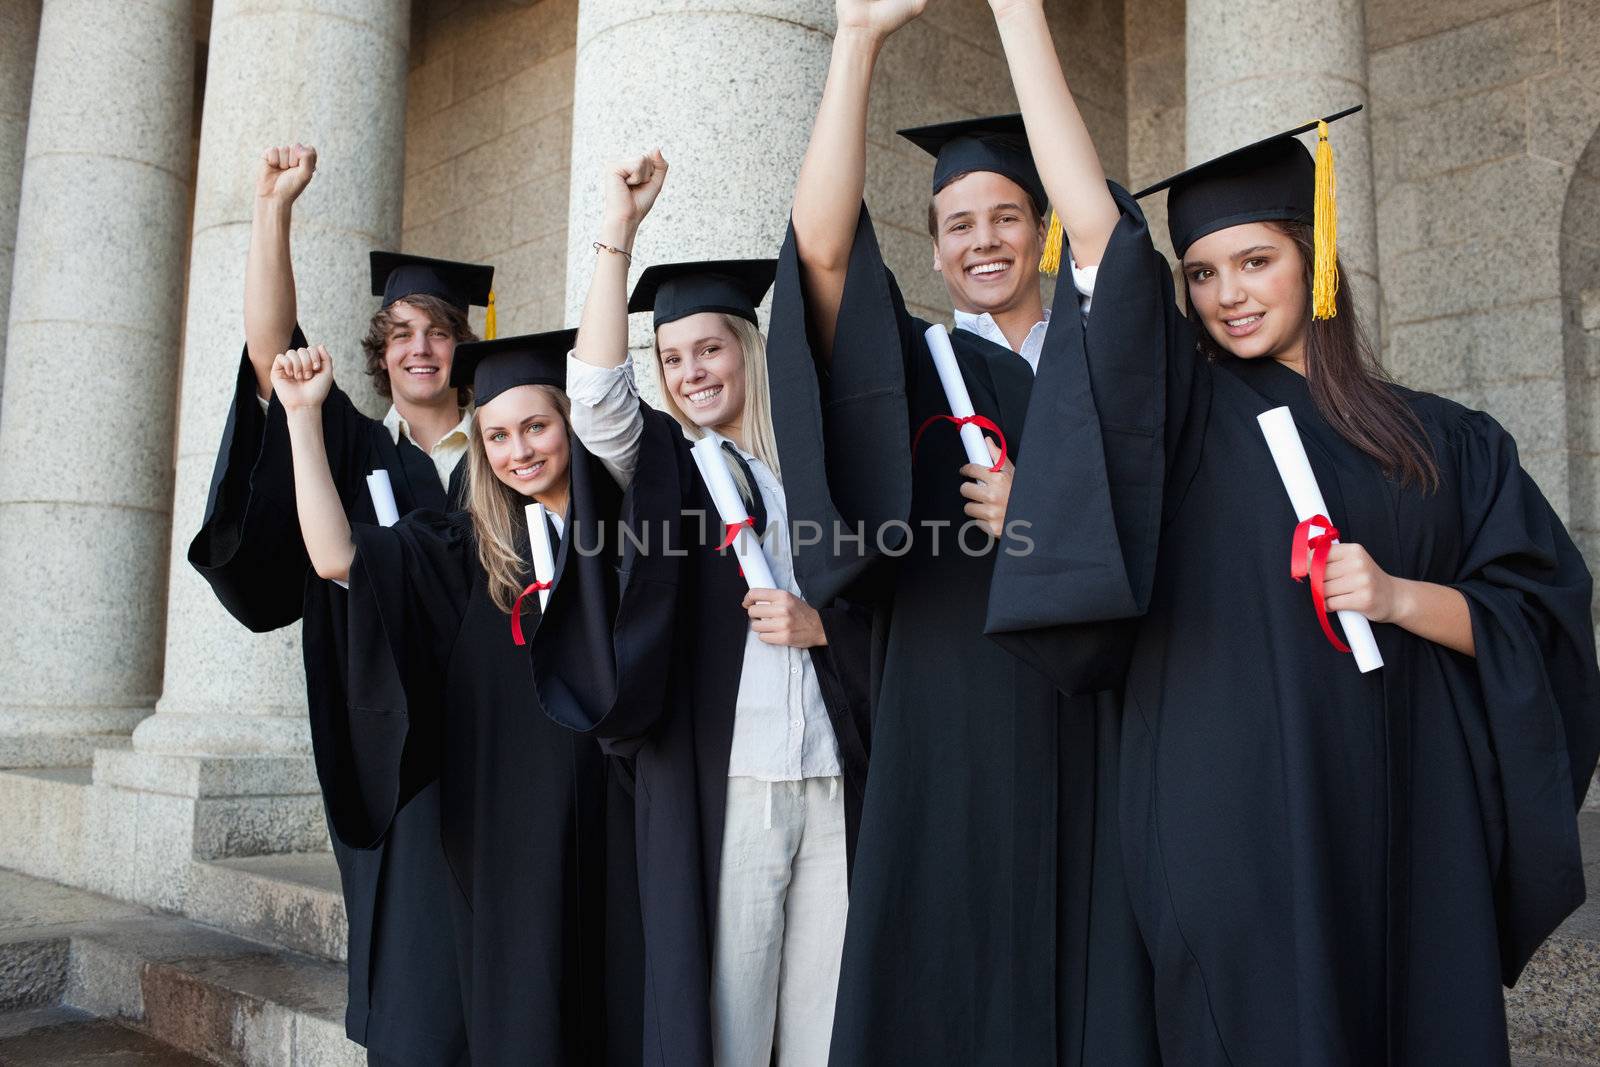 Five happy graduates posing the arm raised by Wavebreakmedia